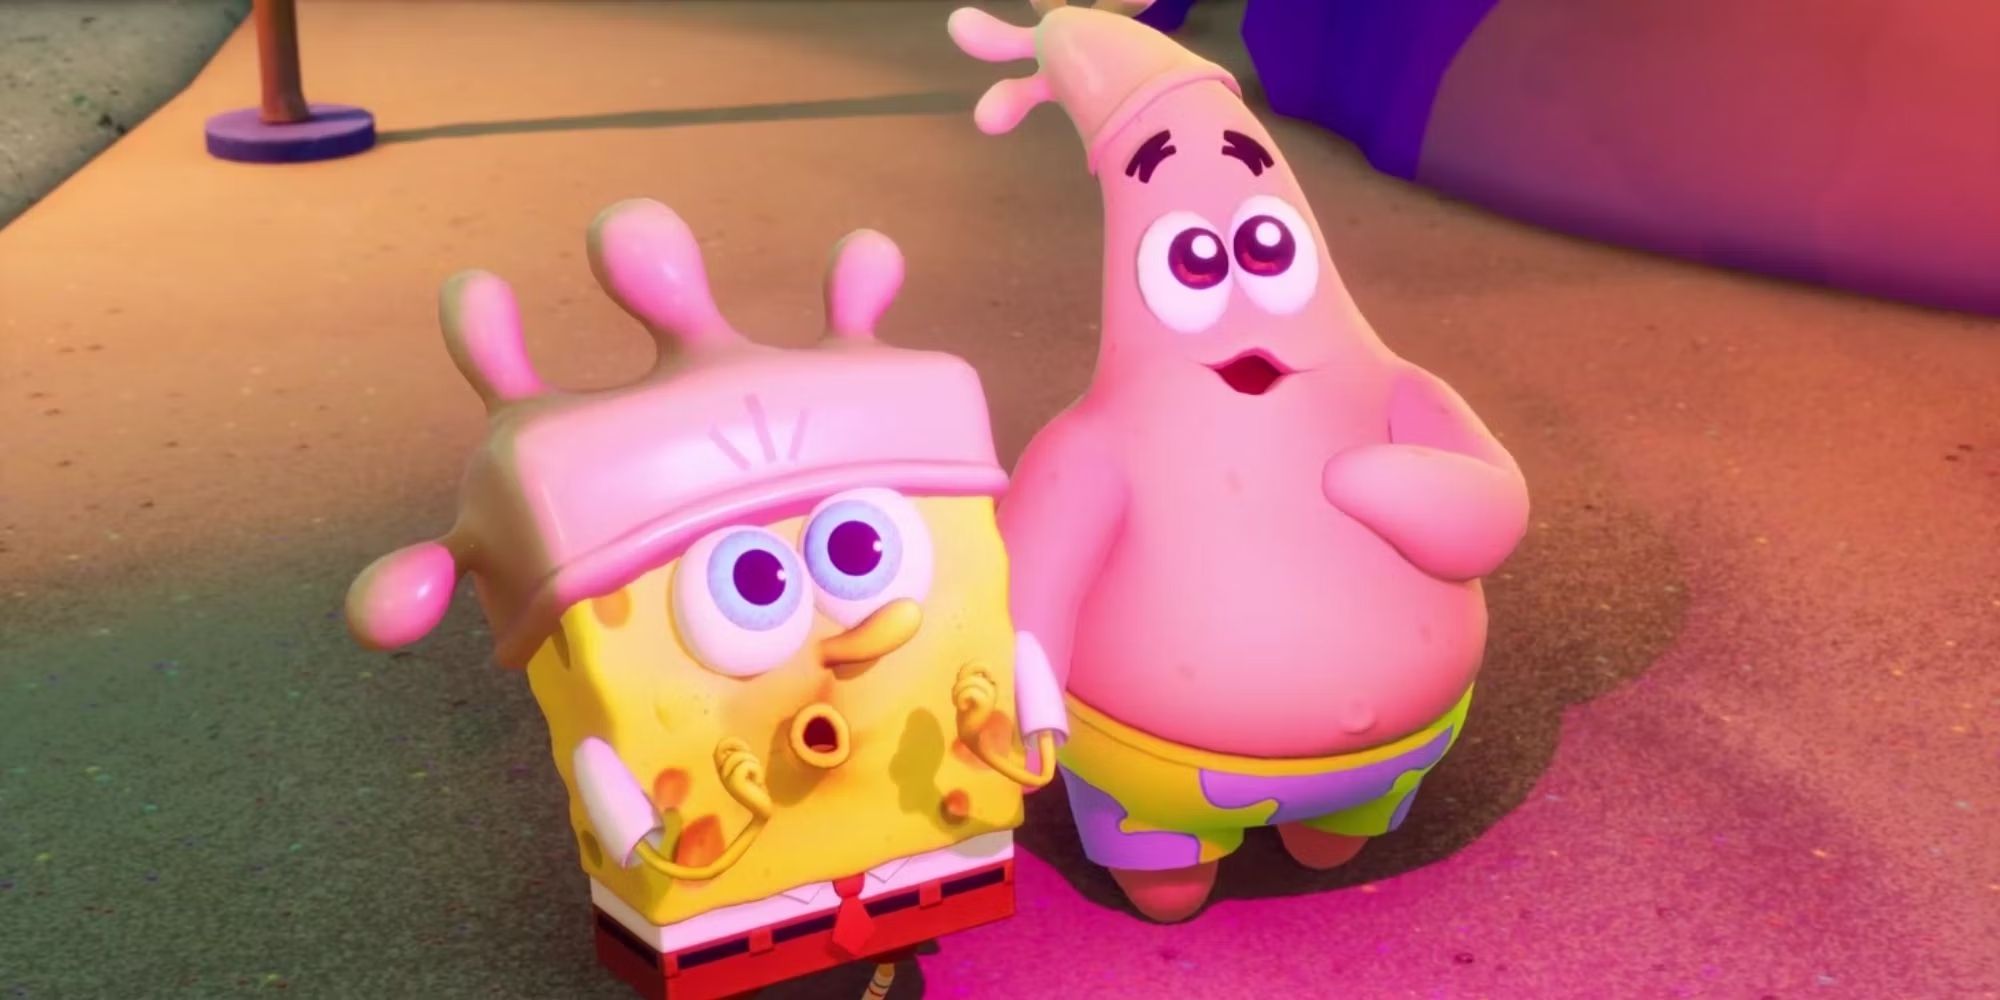 SpongeBob SquarePants: The Cosmic Shake SpongeBob And Patrick standing together